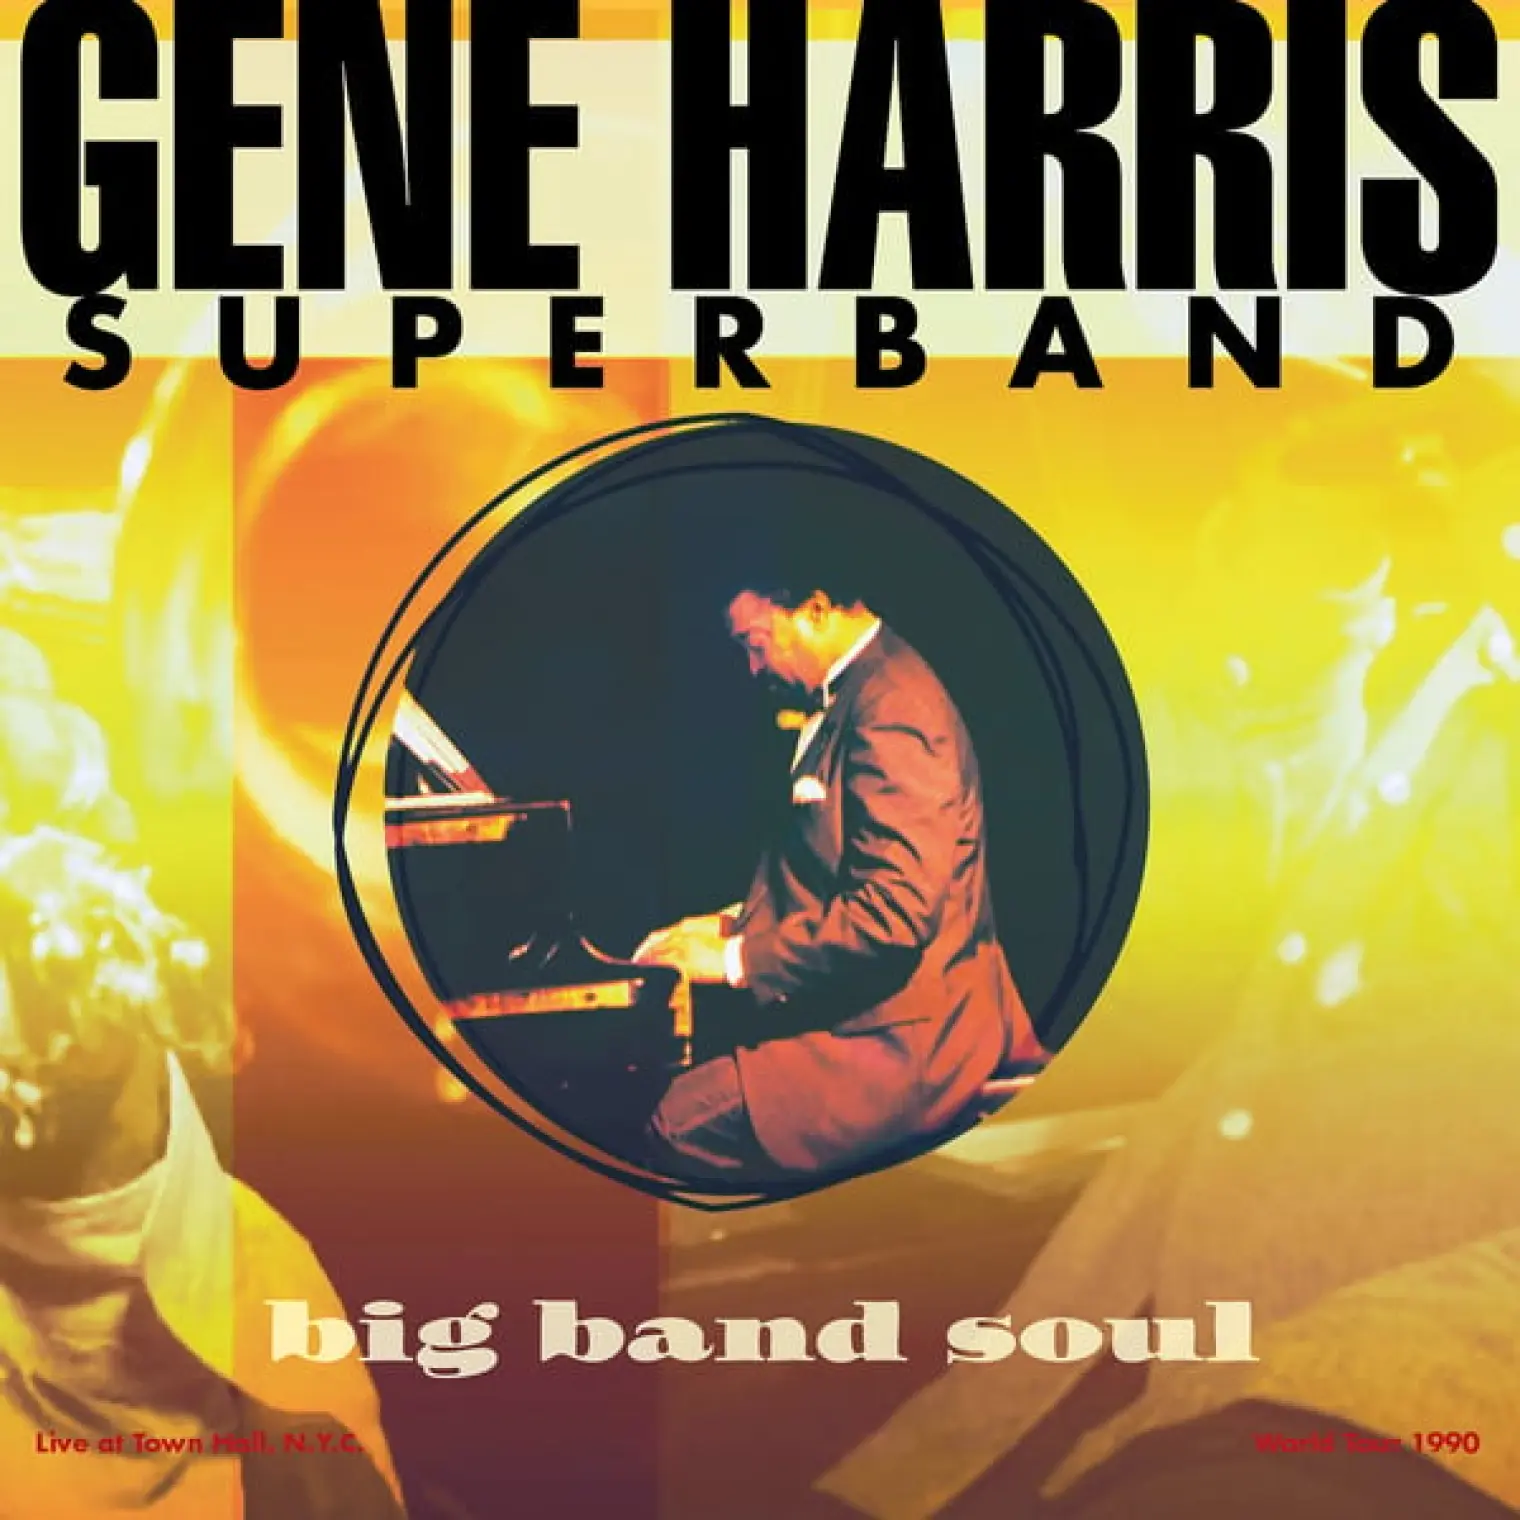 Big Band Soul -  Gene Harris 